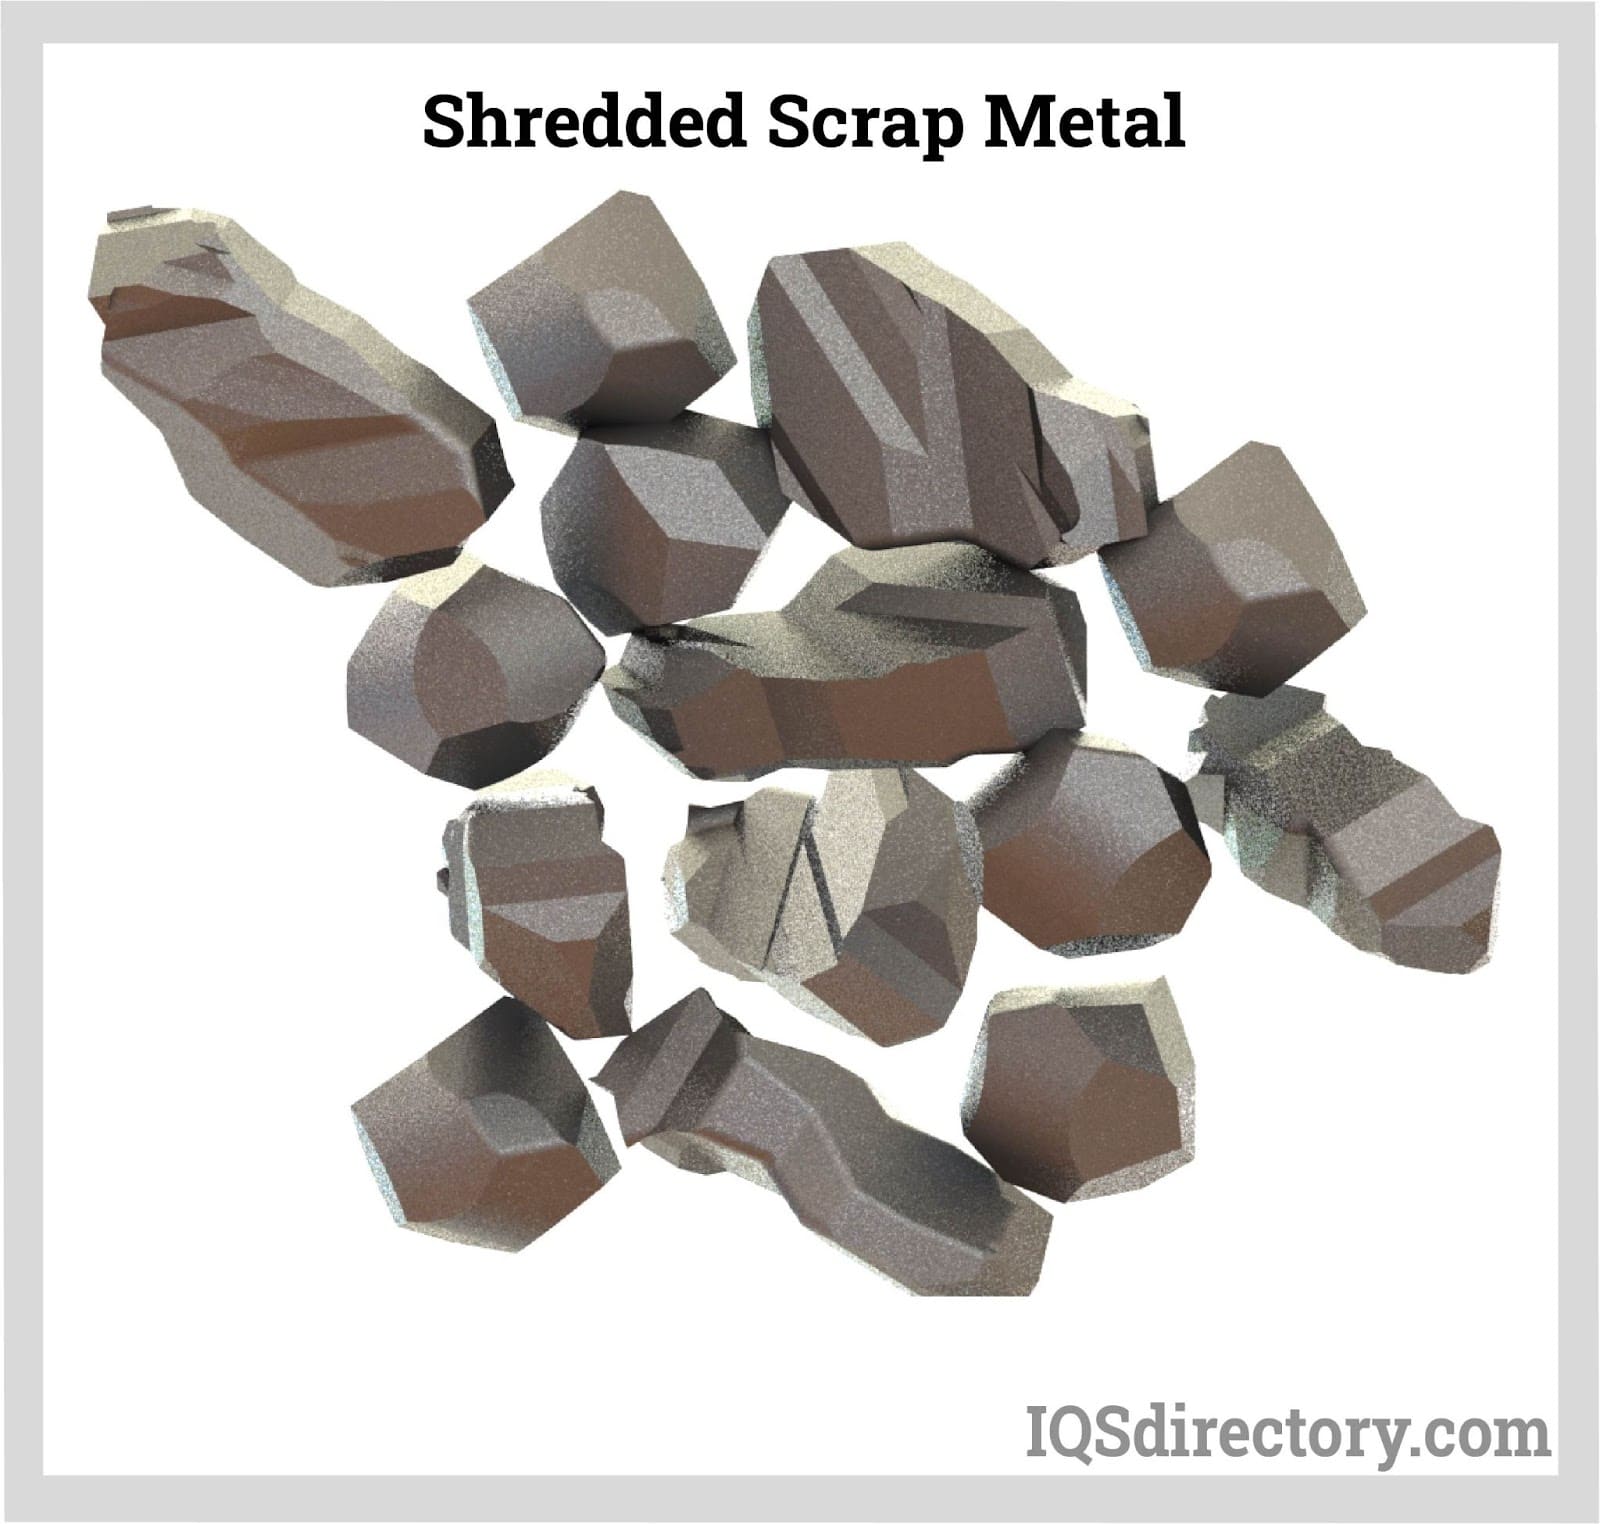 Shredded Scrap Metal